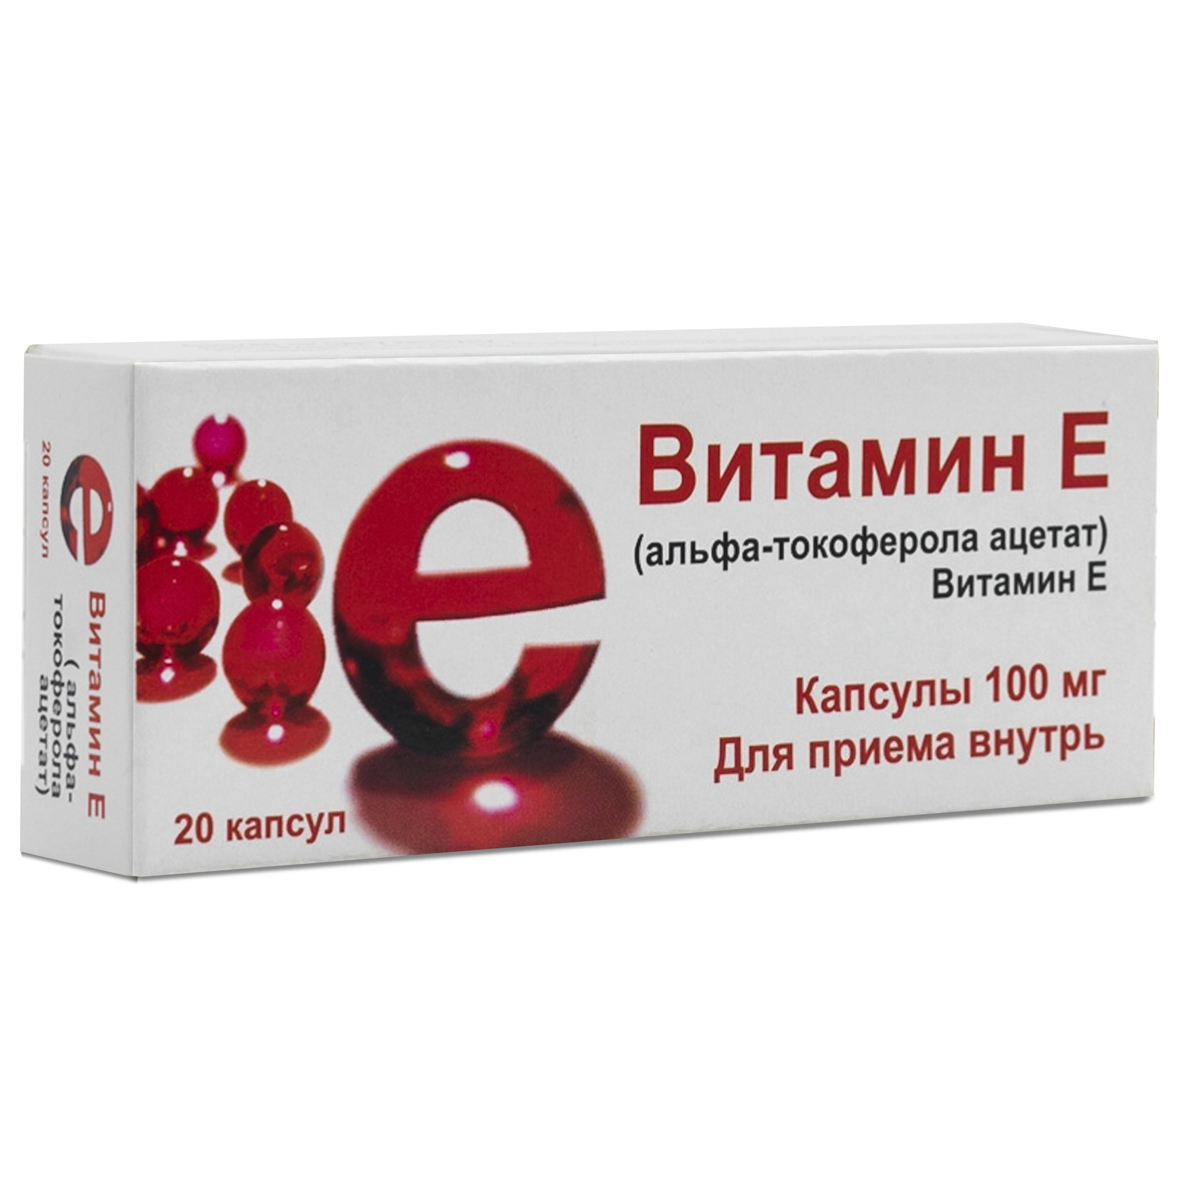 Витамин Е, капсулы 100 мг, 20 шт.